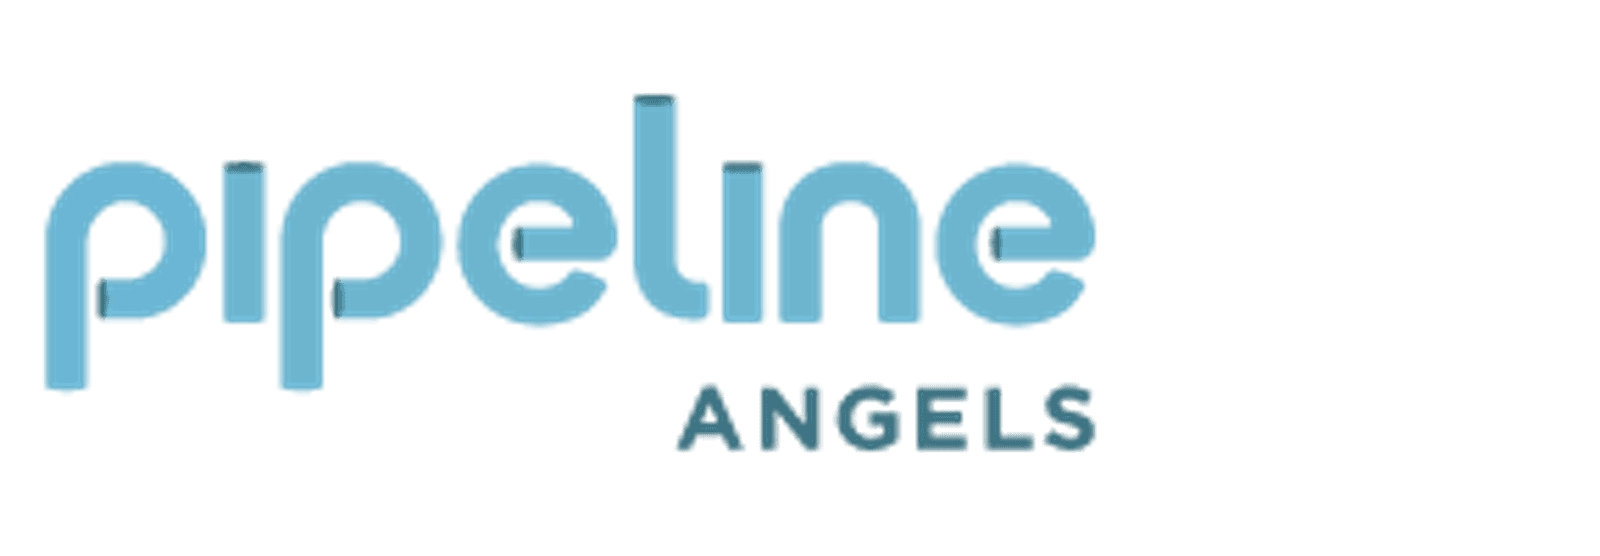 Pipeline angels logo